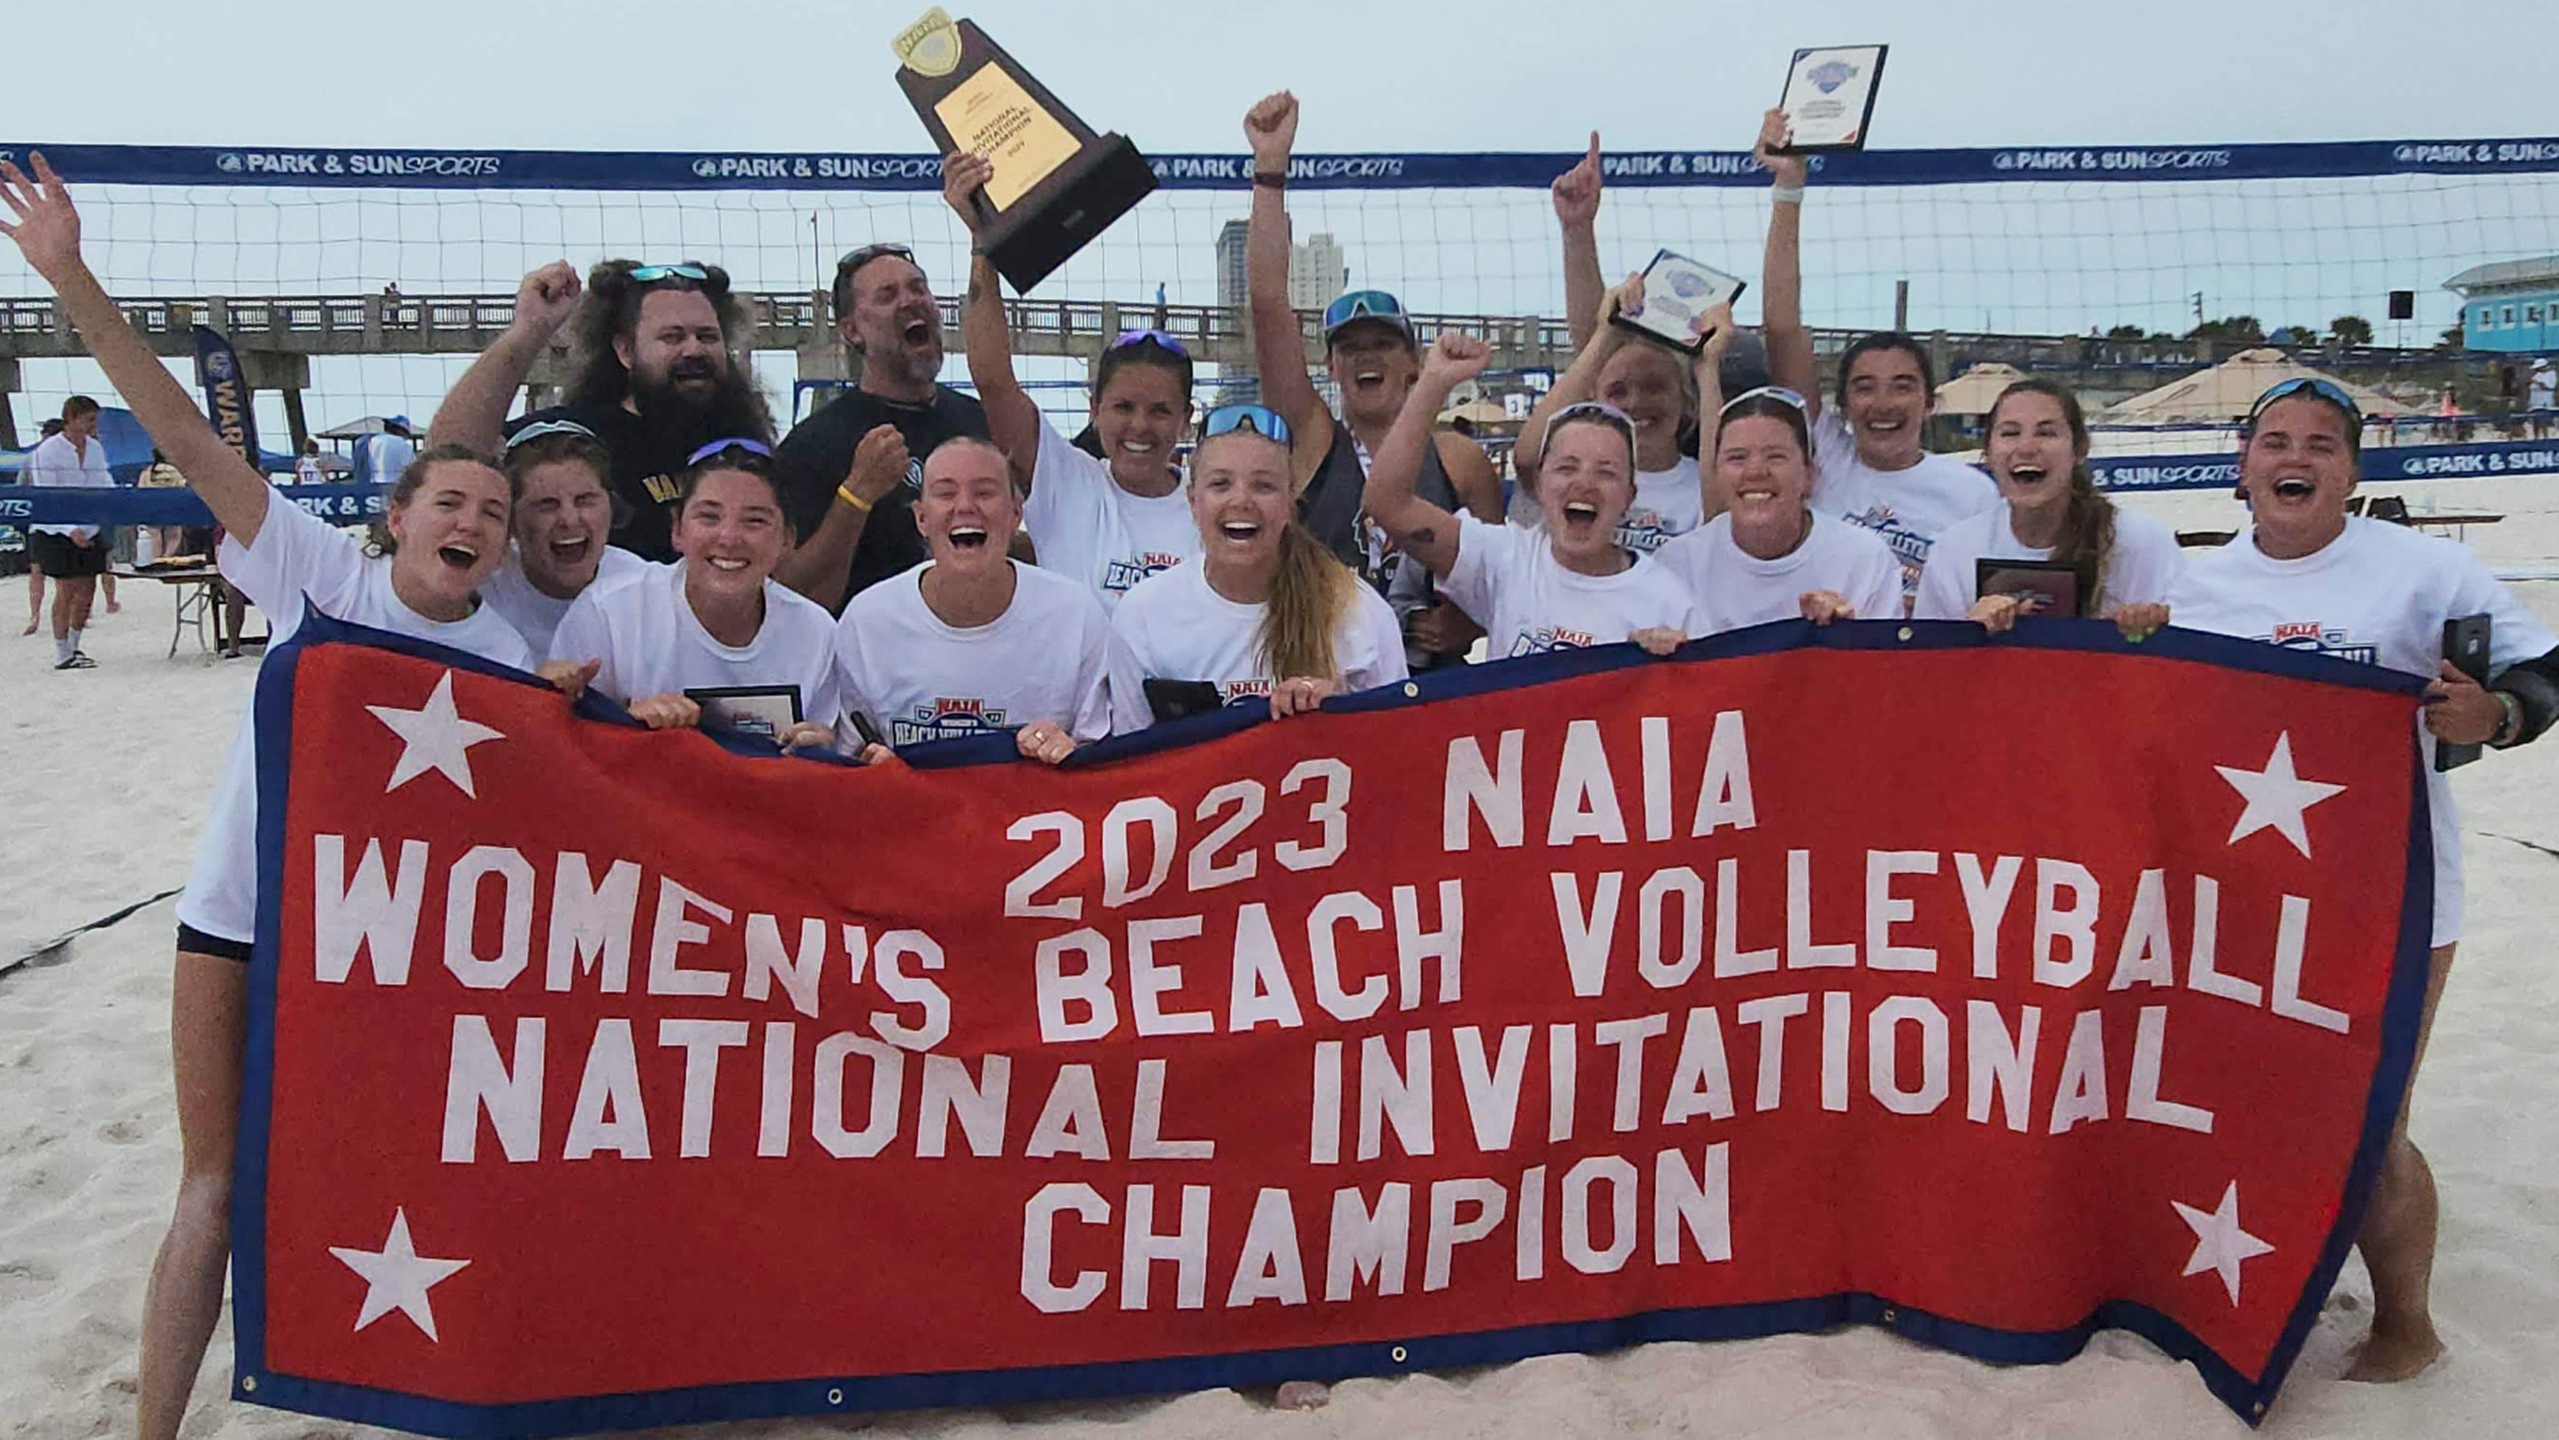 Recap of the 2023 NAIA Women’s Beach Volleyball Invitational Championship